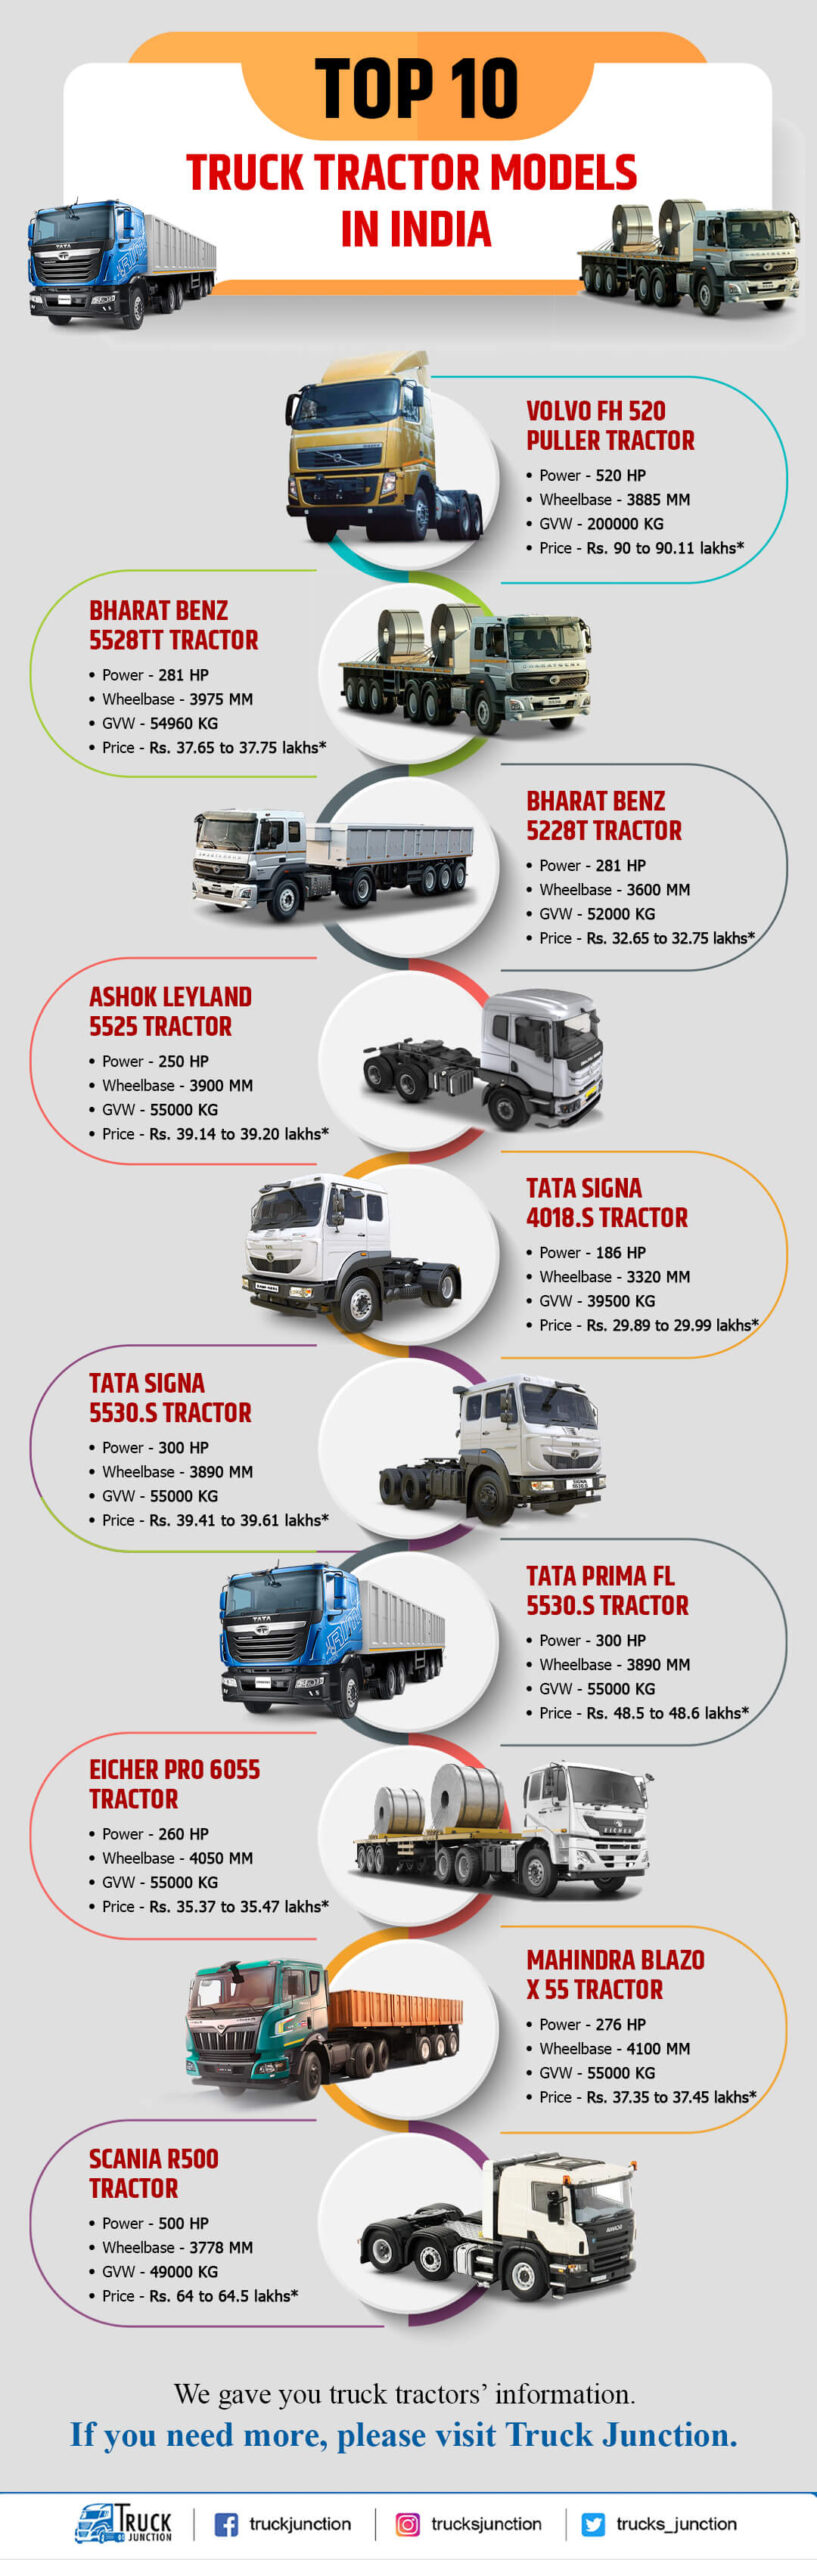 Top 10 Truck Tractor Models in India